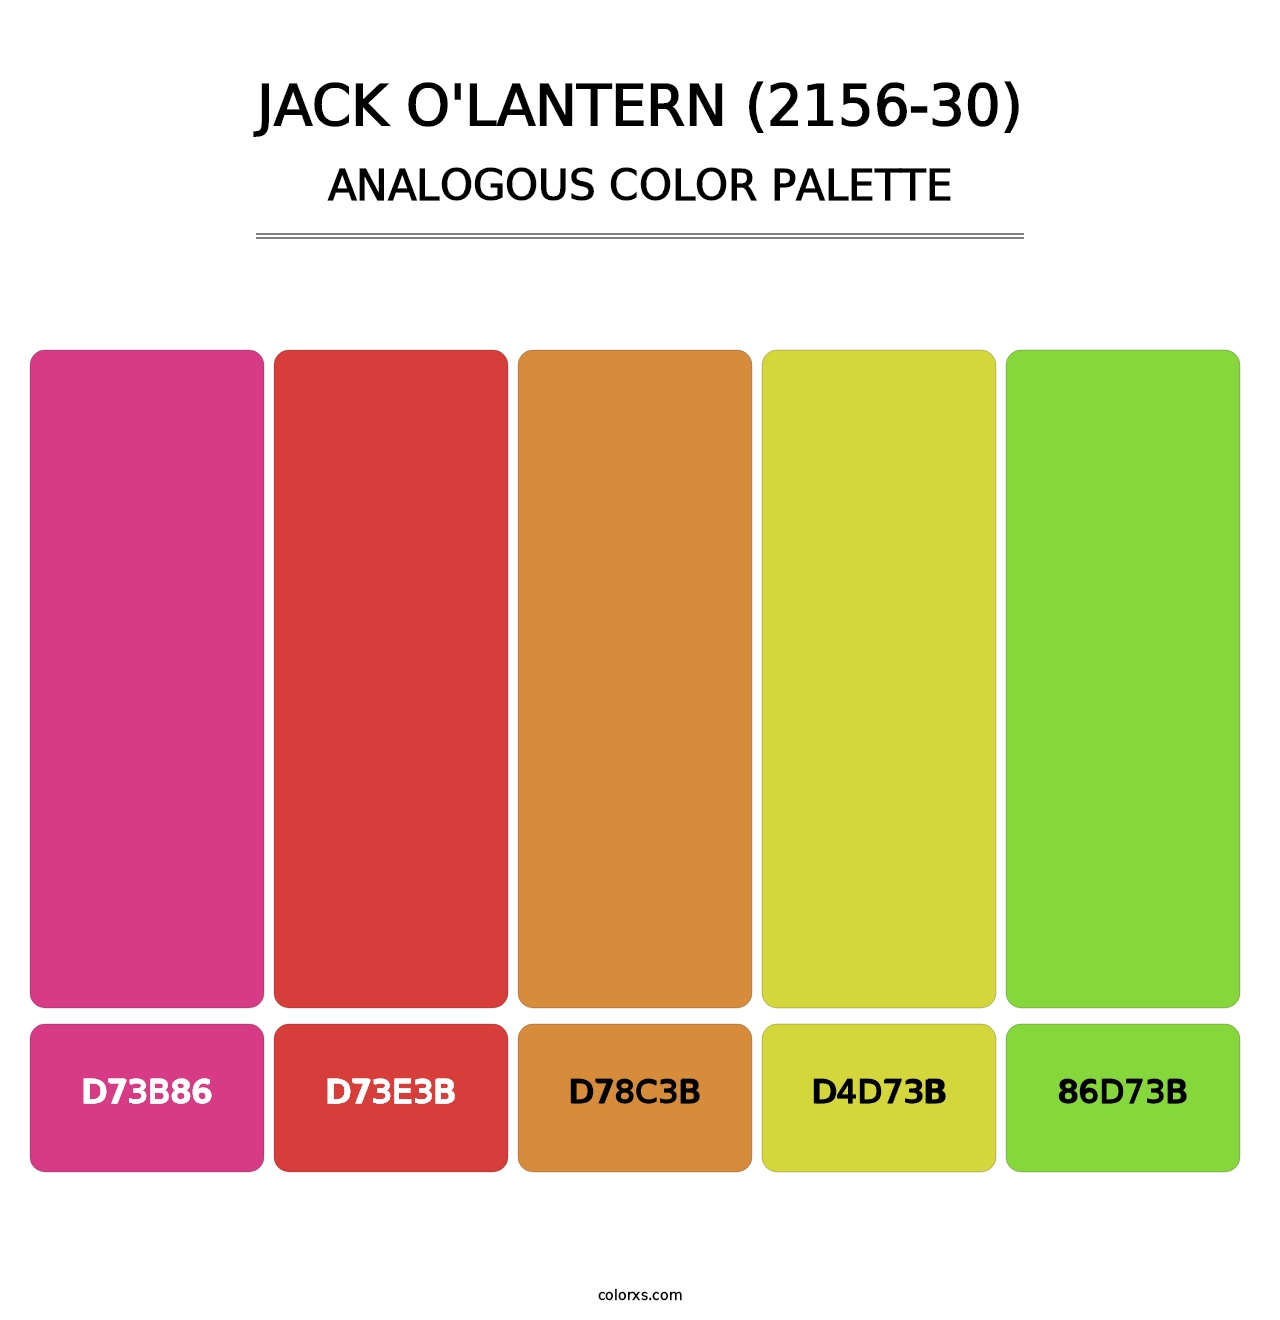 Jack O'Lantern (2156-30) - Analogous Color Palette